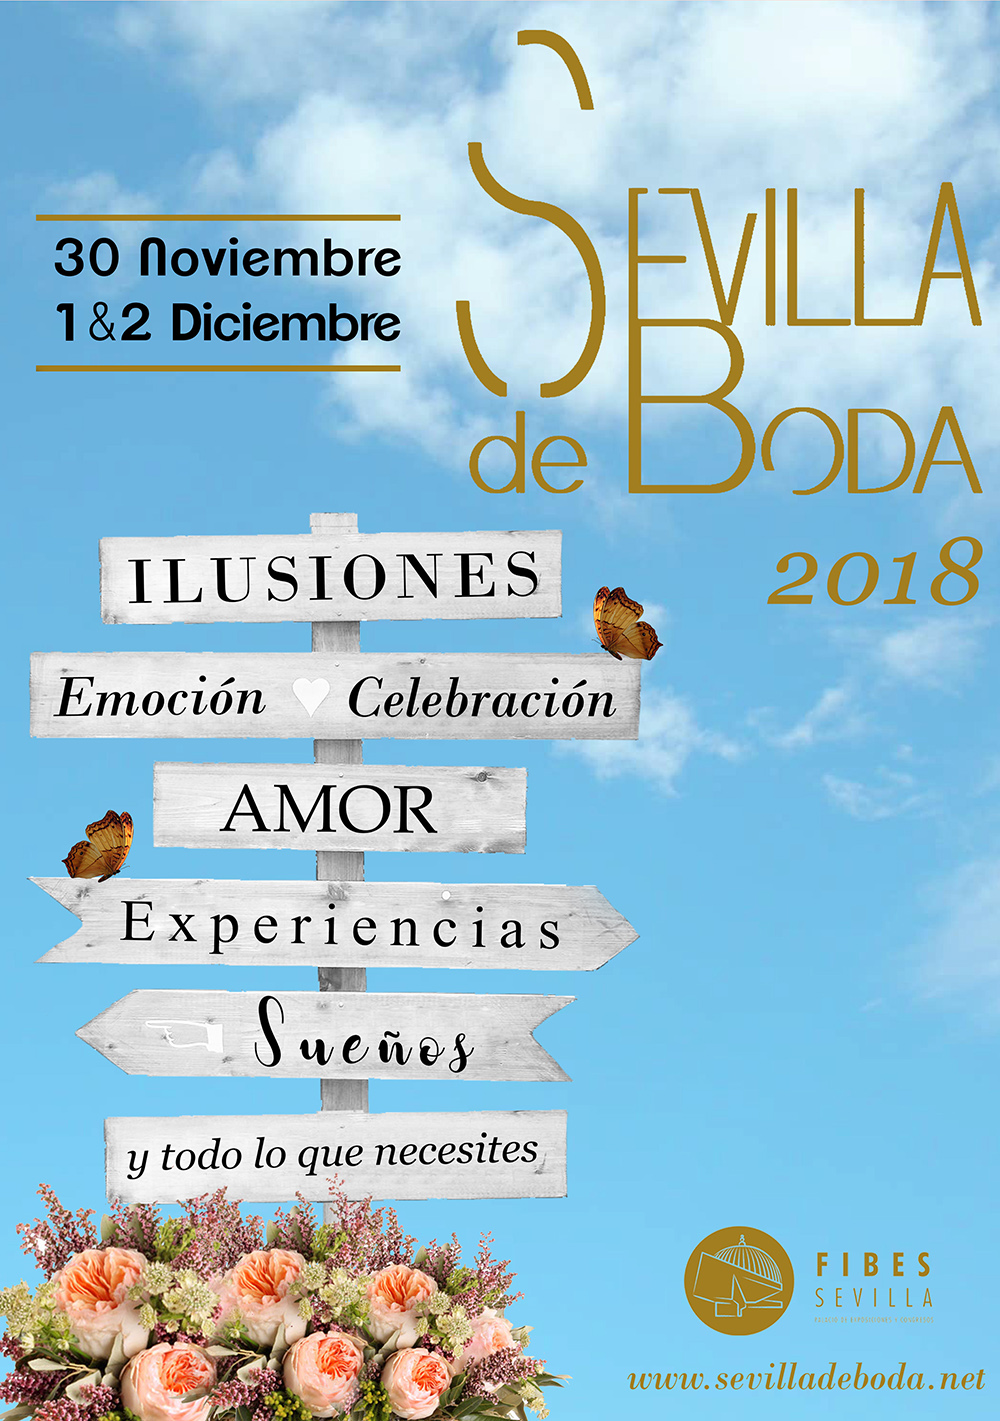 Sevilla de Bodas 2018 à Fibes